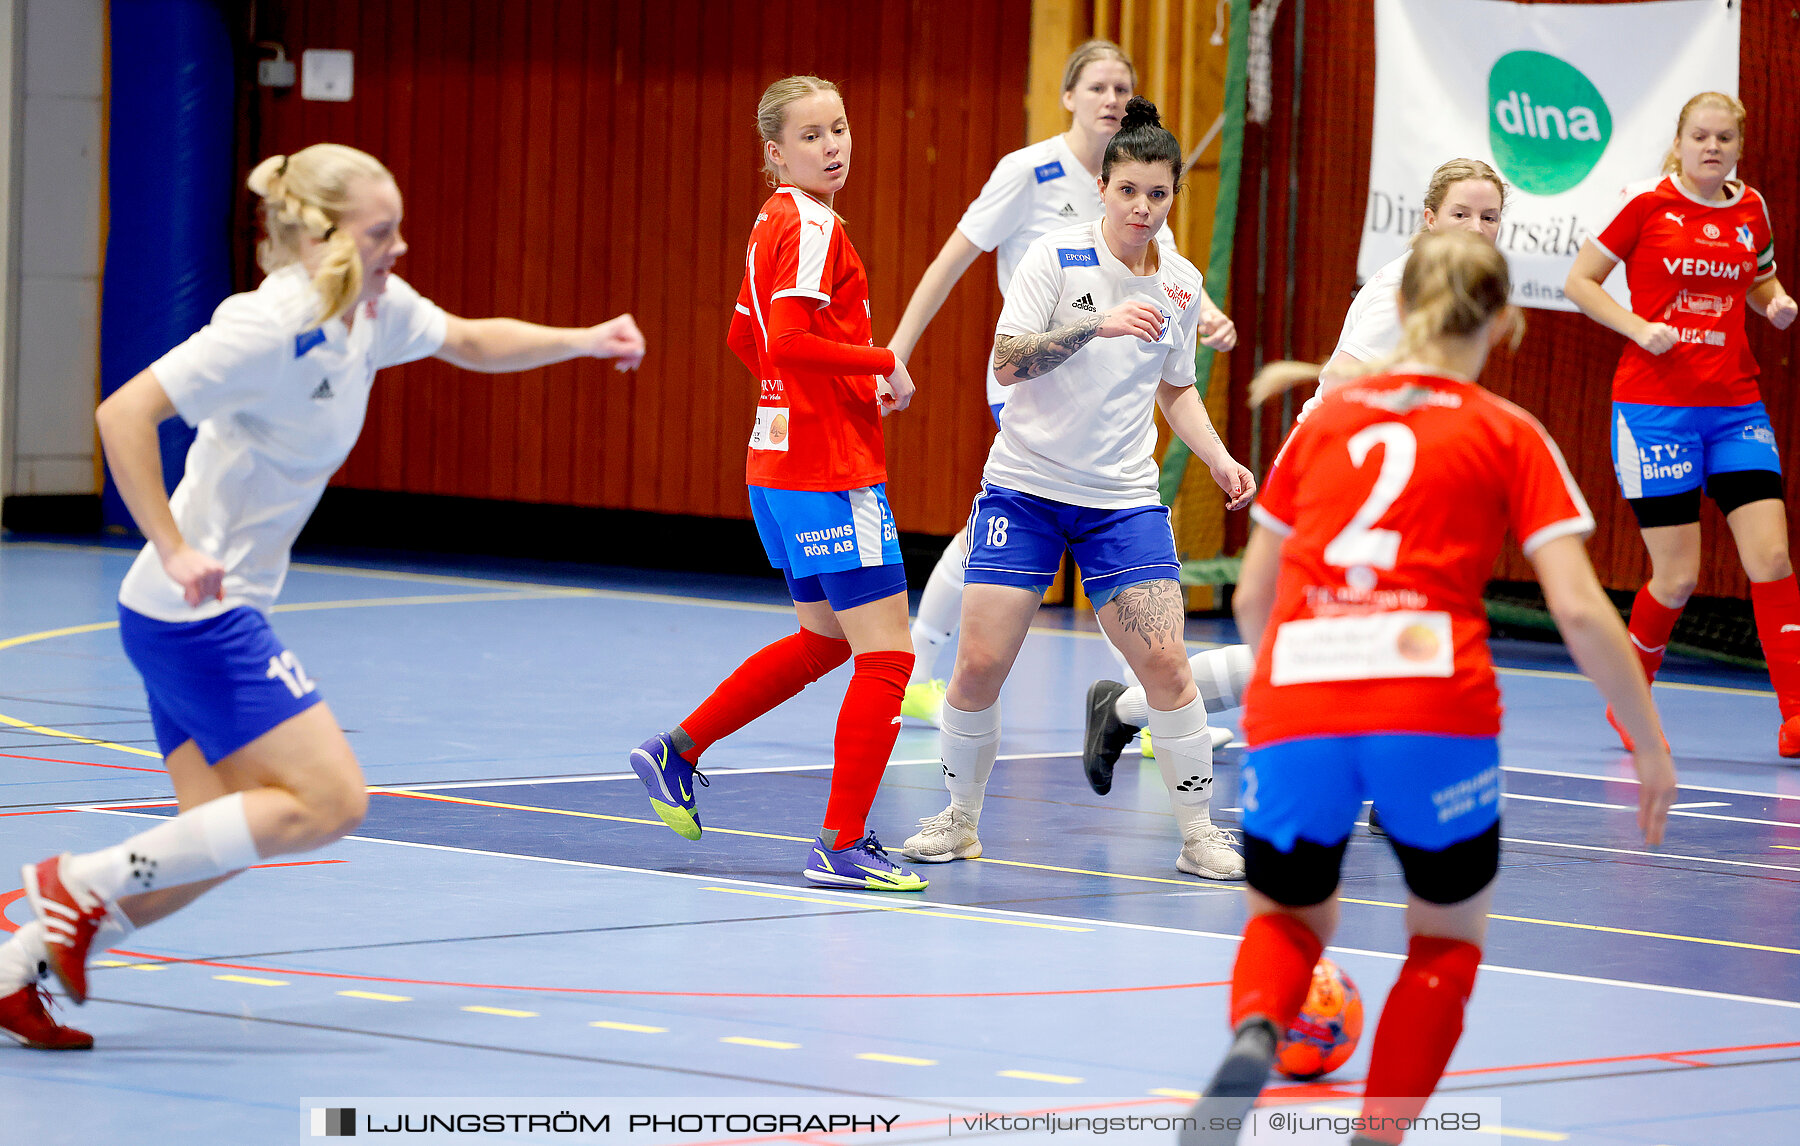 Dina-cupen 2024 1 4-final Vedums AIS-IFK Hjo 2-3,dam,Idrottshallen,Töreboda,Sverige,Futsal,,2024,326227